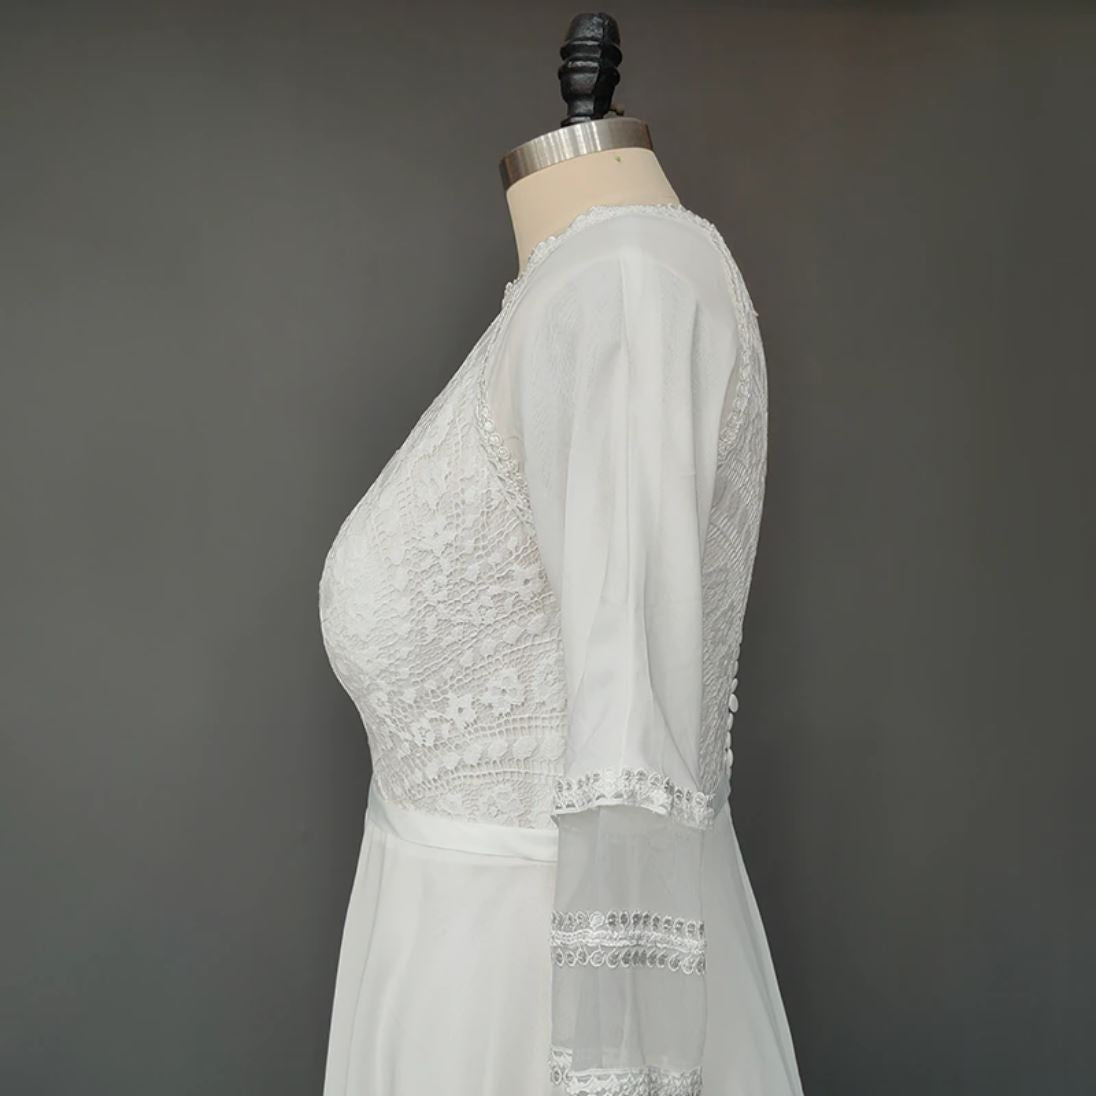 O Neck Long Sleeves A Line Chiffon Sexy Bohemian Lace Wedding Dress Boho Wedding Dresses BlissGown 